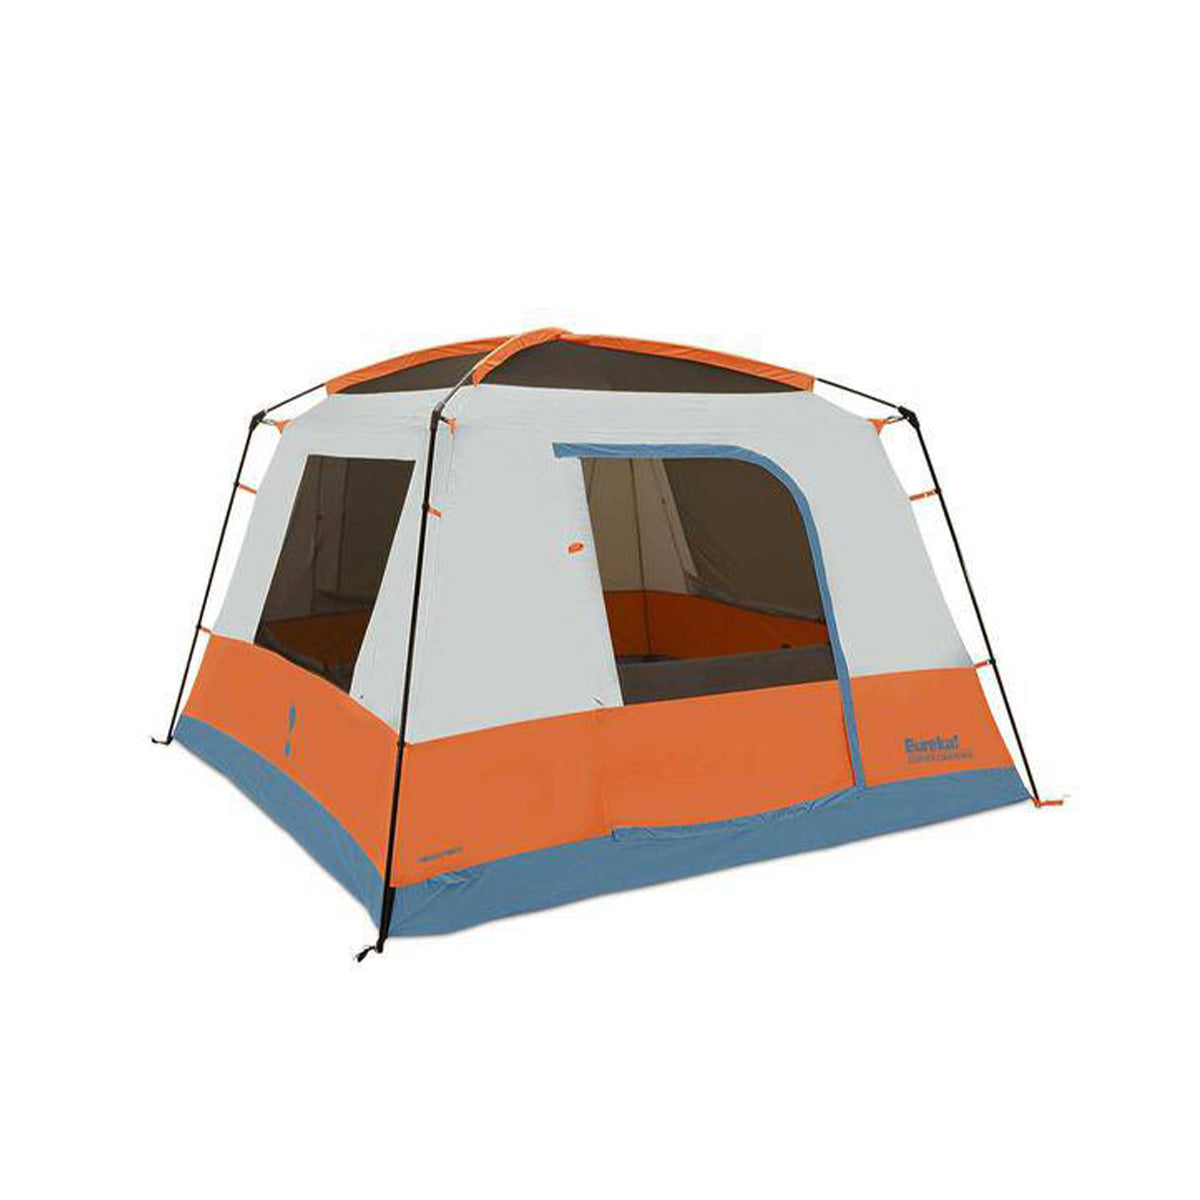 Copper Canyon Lx Tent